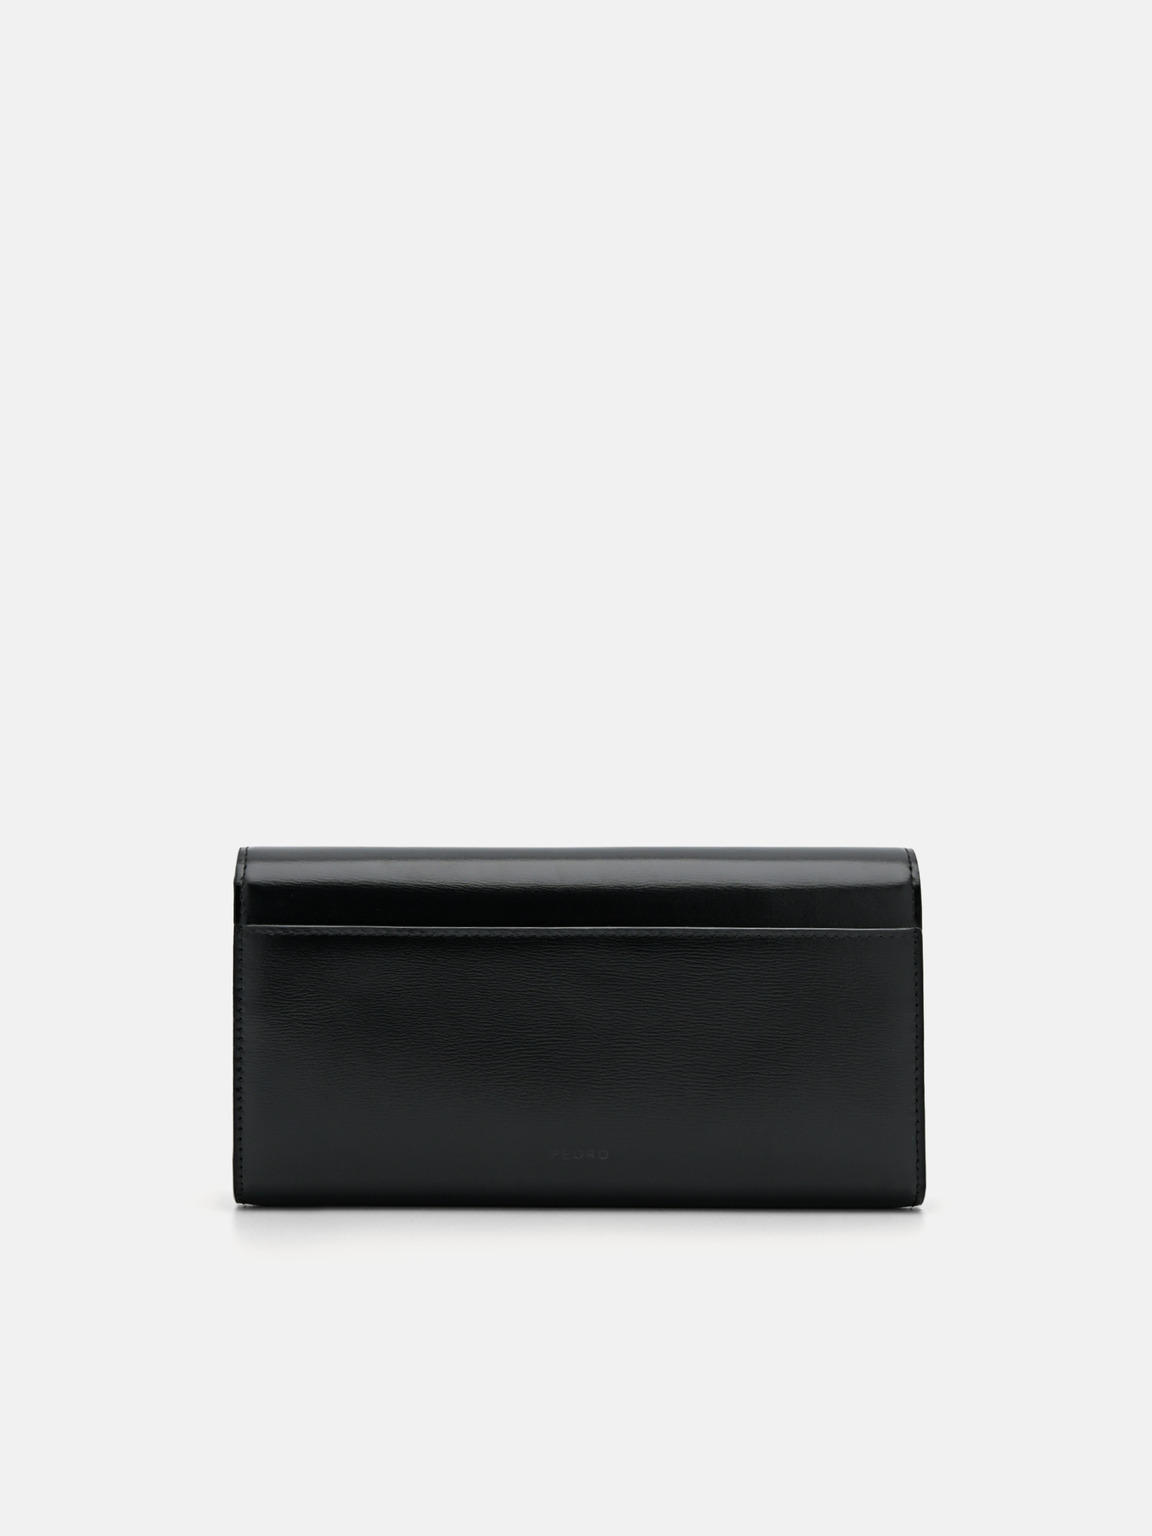 PEDRO工作室皮革雙折疊錢包, 黑色